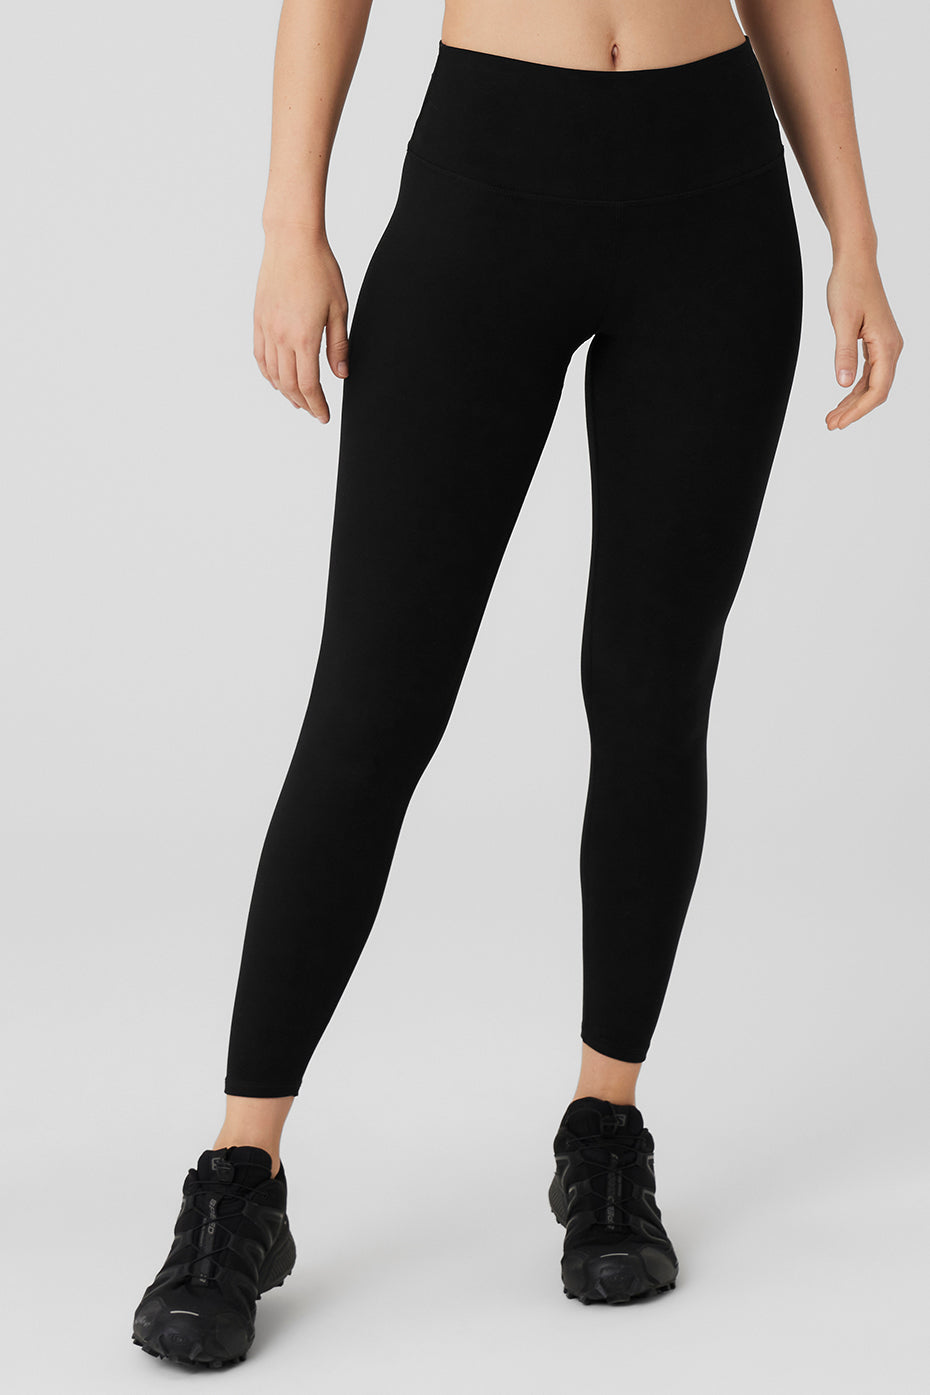  OASISWORKS Women's High Waisted Yoga Pants 7/8 Length